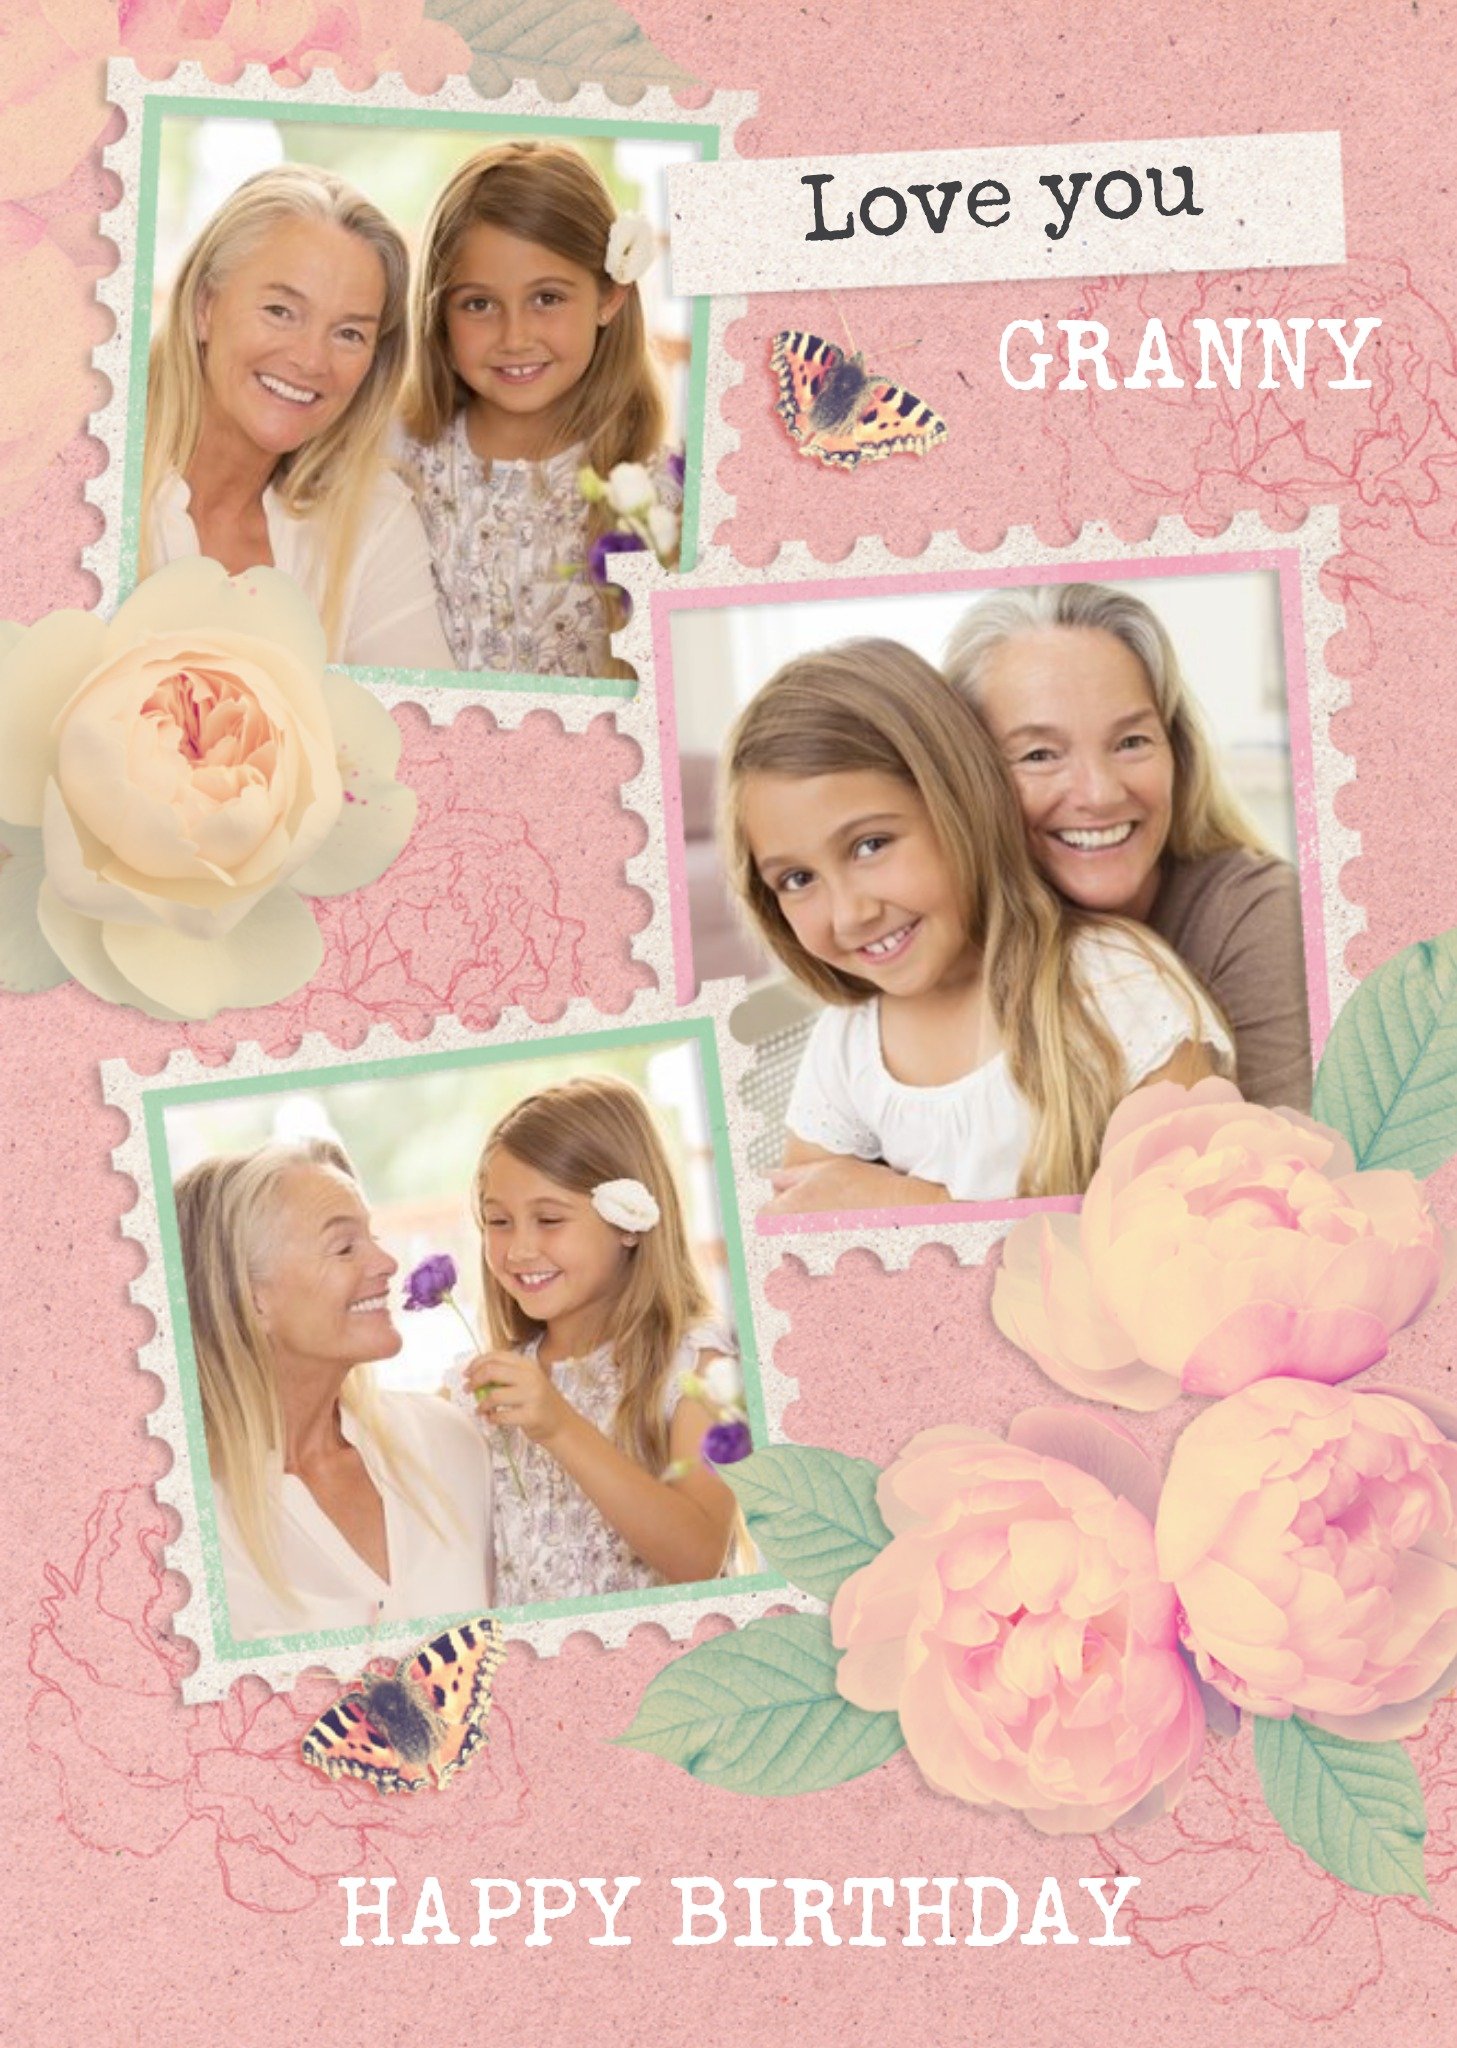 Moonpig Love You Granny - Photo Upload Birthday Card, Large